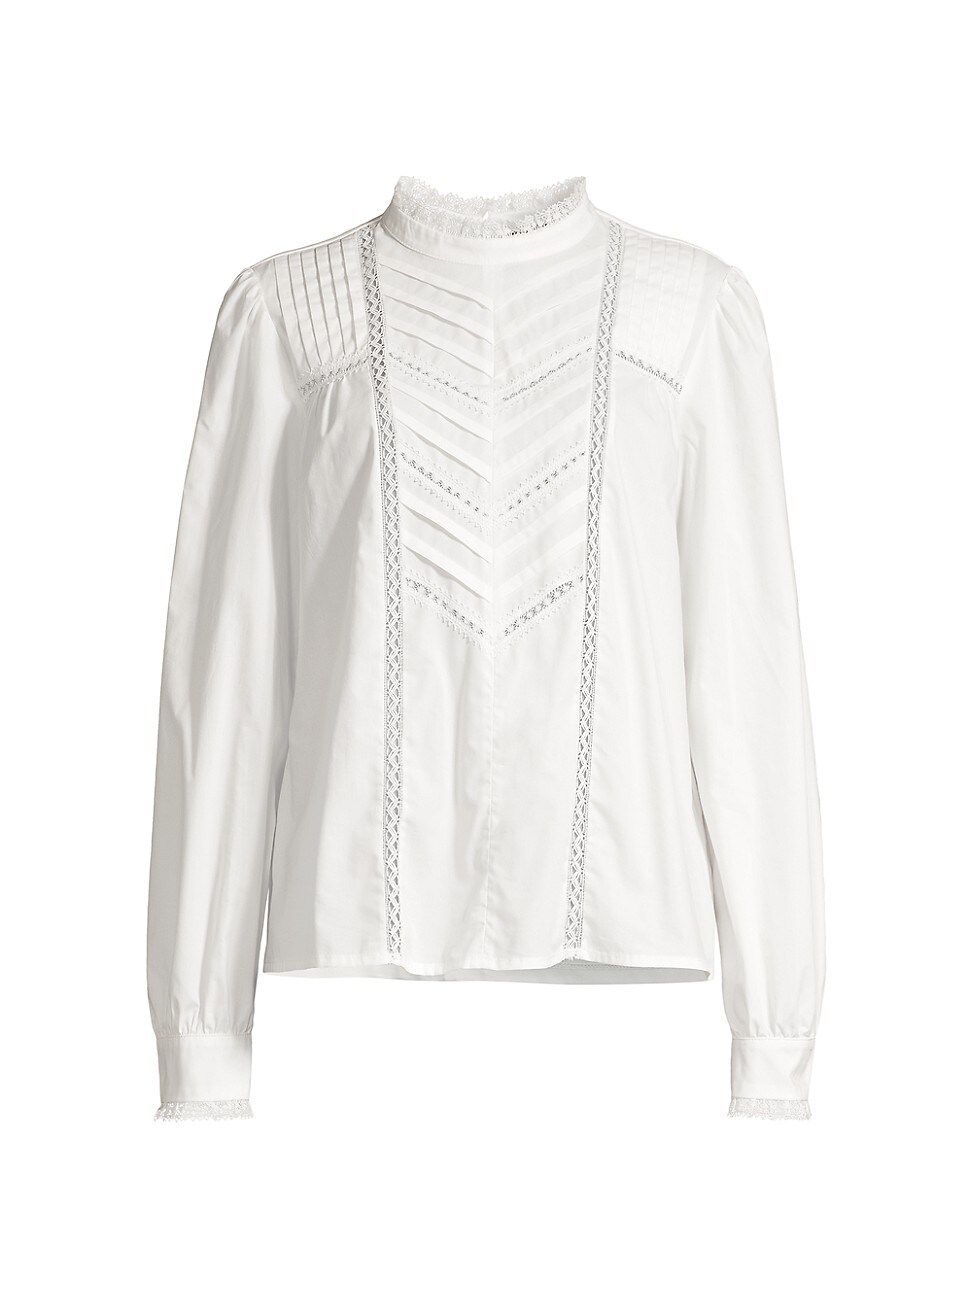 Calca White Embroidered Shirt